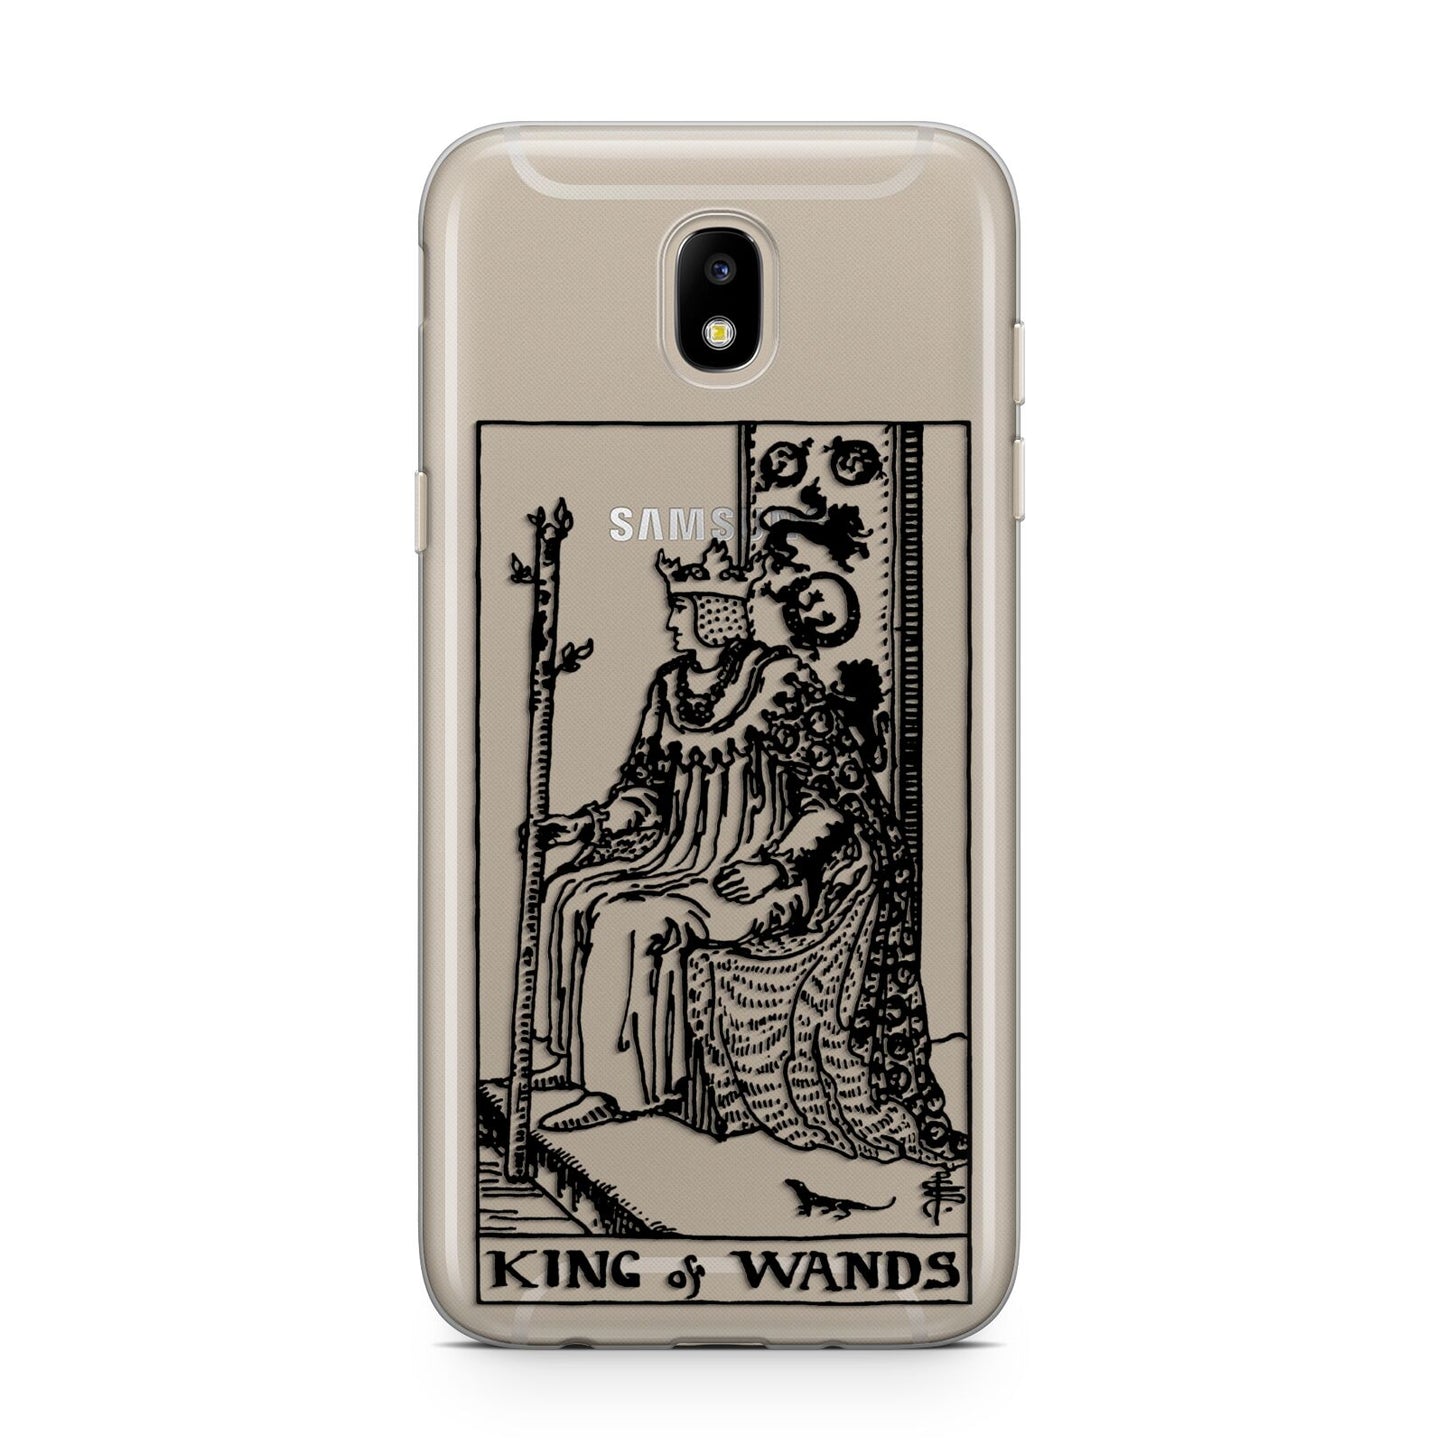 King of Wands Monochrome Samsung J5 2017 Case